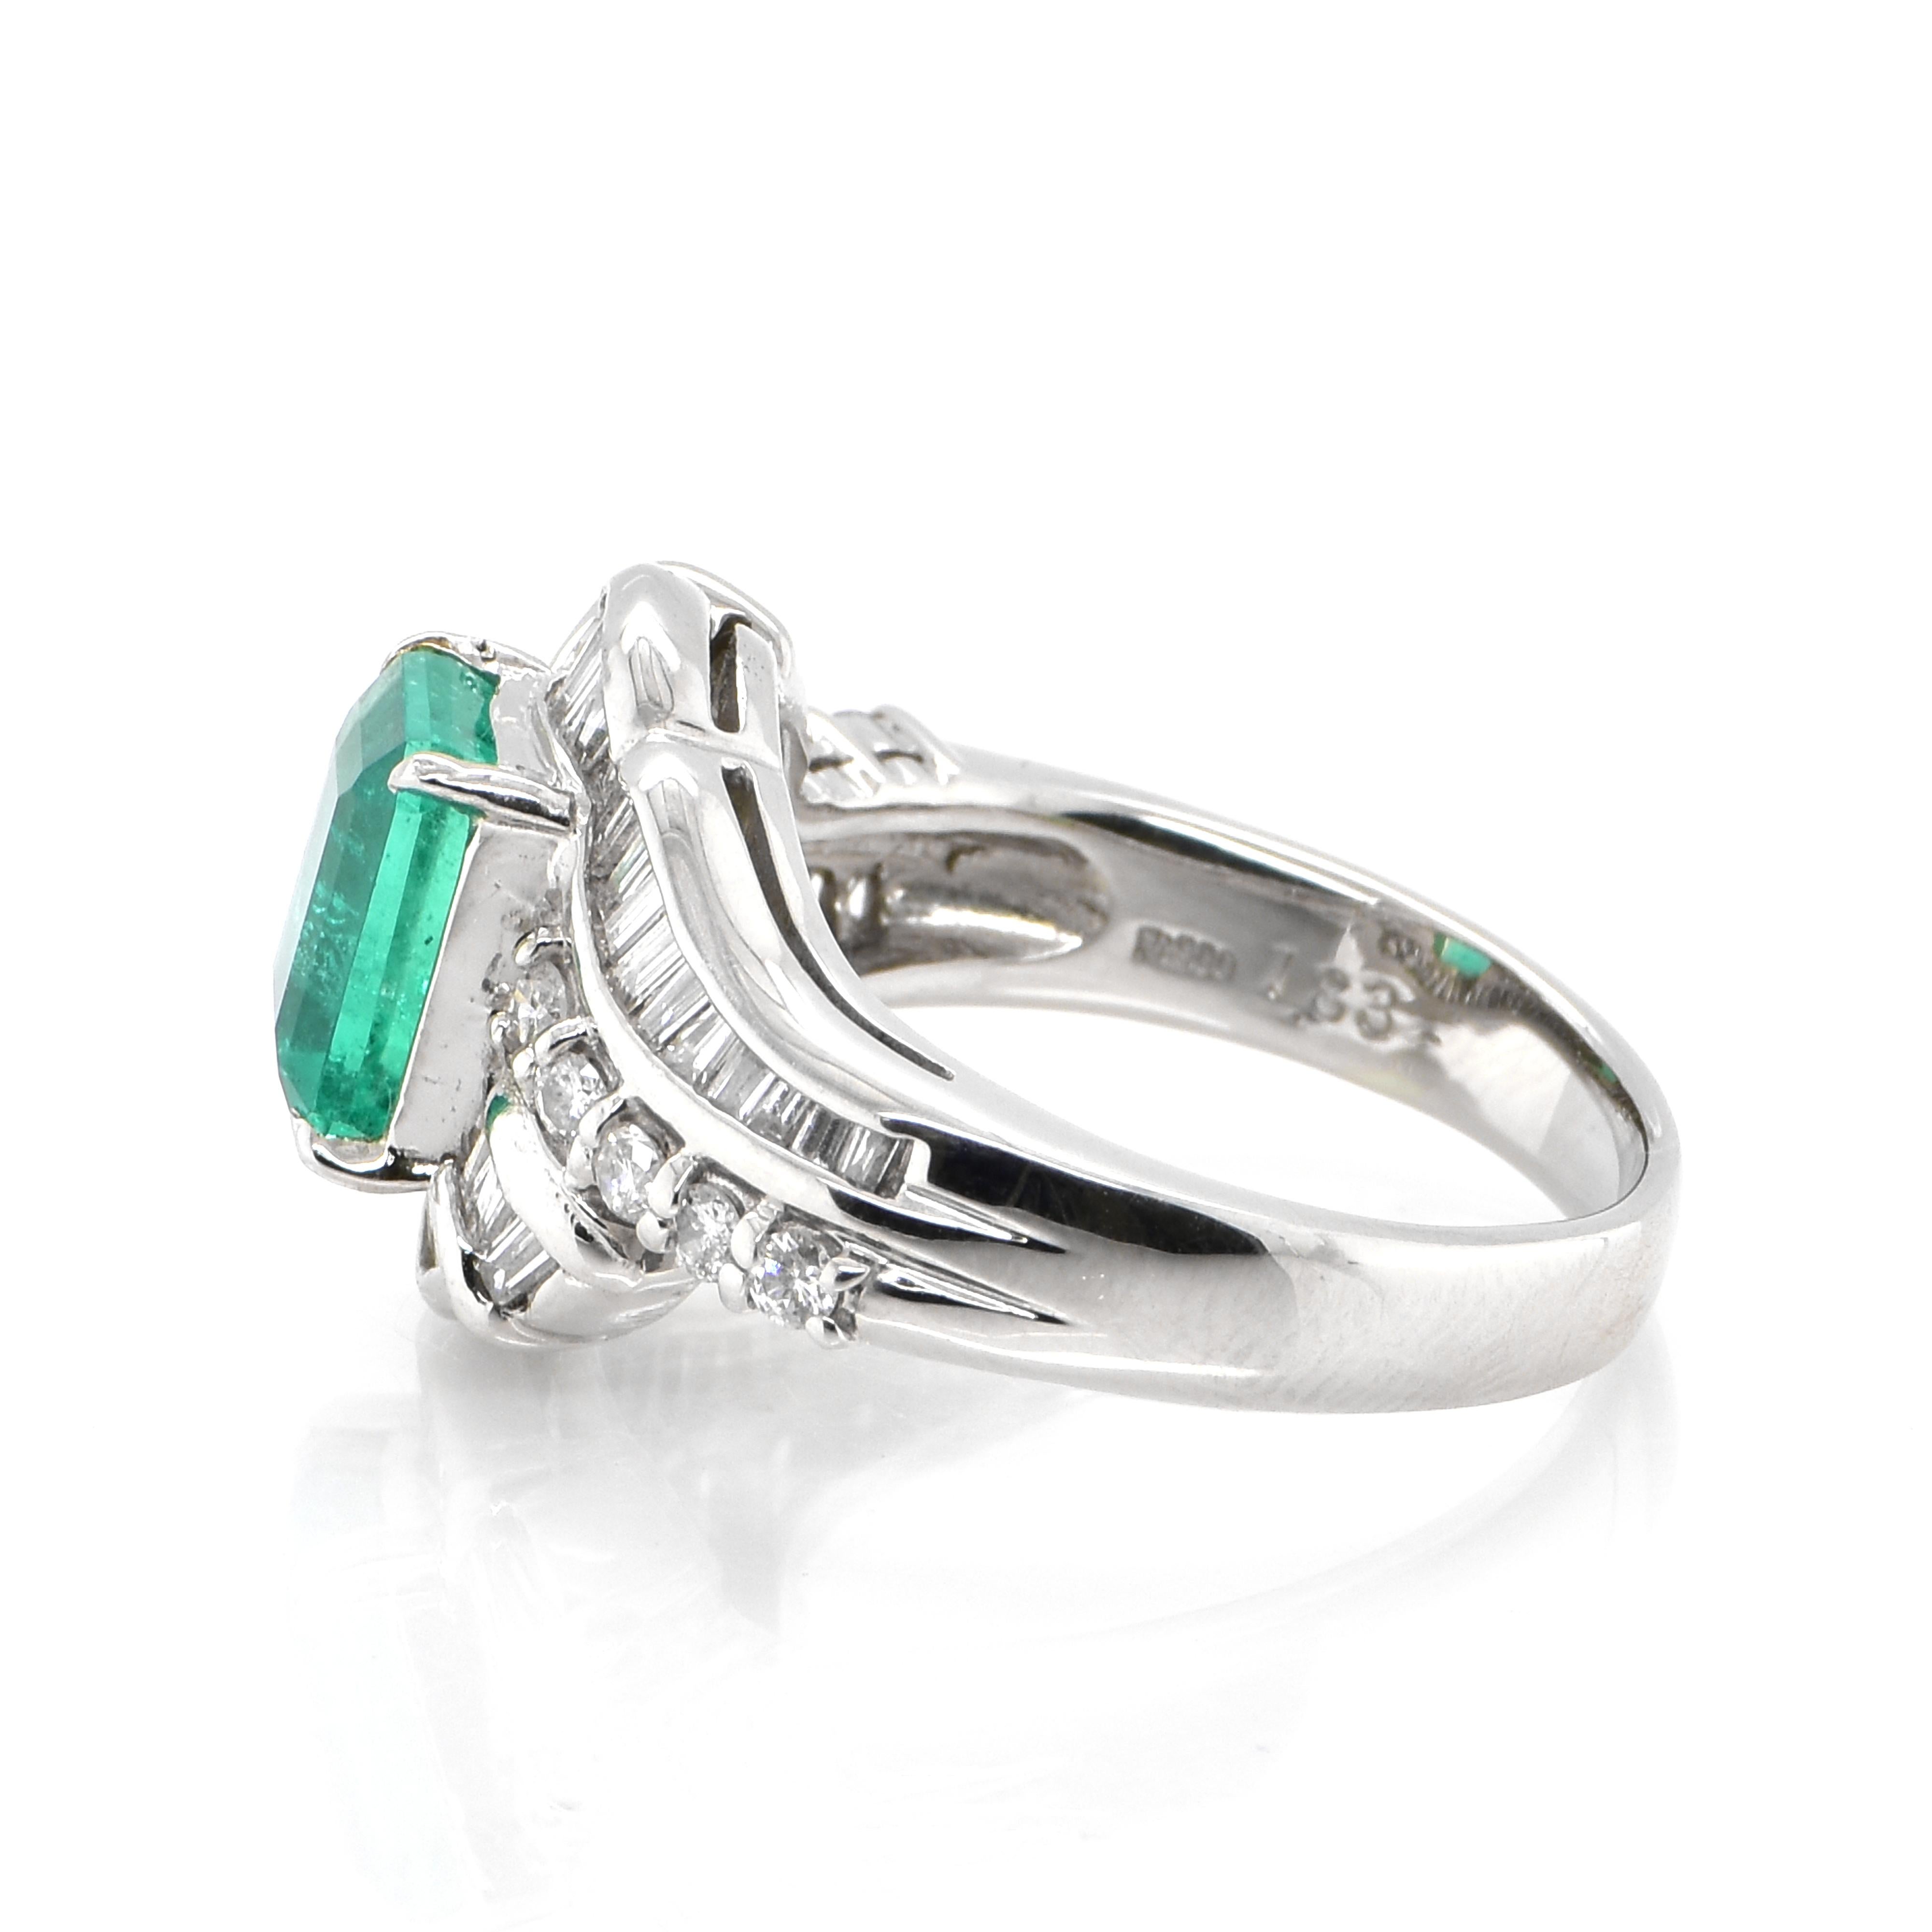 Emerald Cut 1.83 Carat Natural Emerald & Diamond Estate Cocktail Ring Made in Platinum For Sale